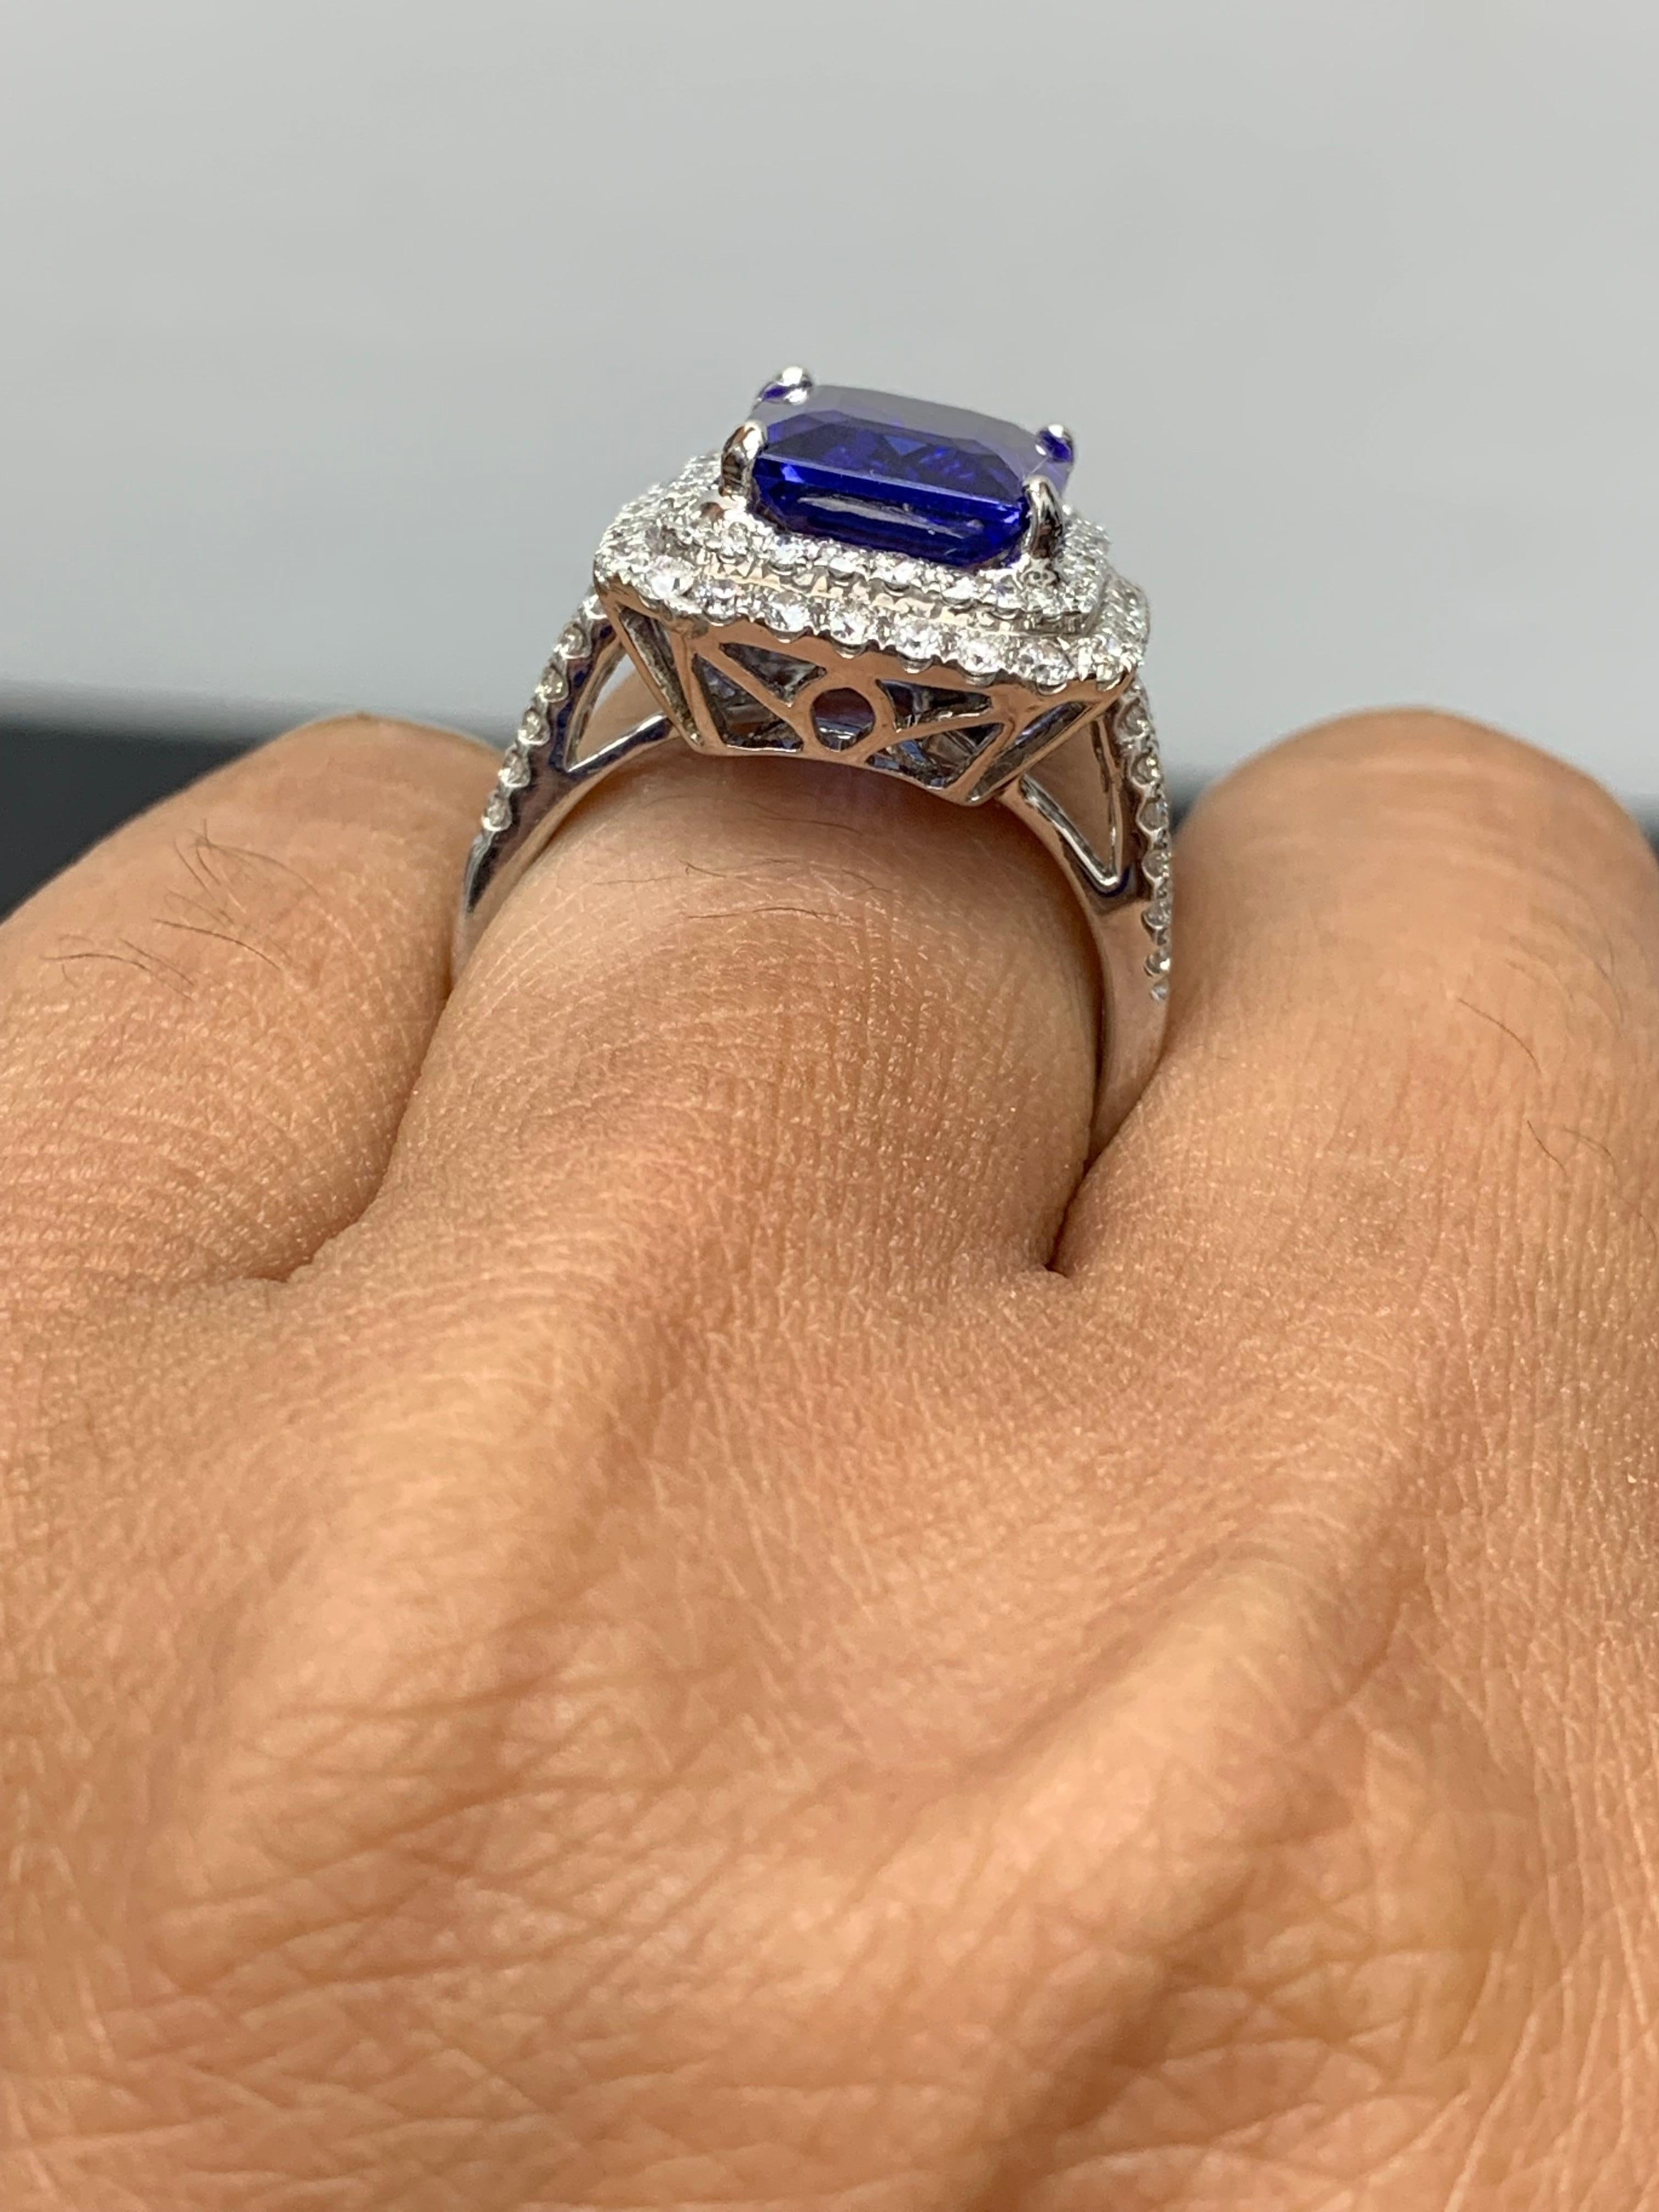 Women's or Men's 4.32 Carat Emerald Cut Tanzanite Diamond Ring in 18K White Gold For Sale